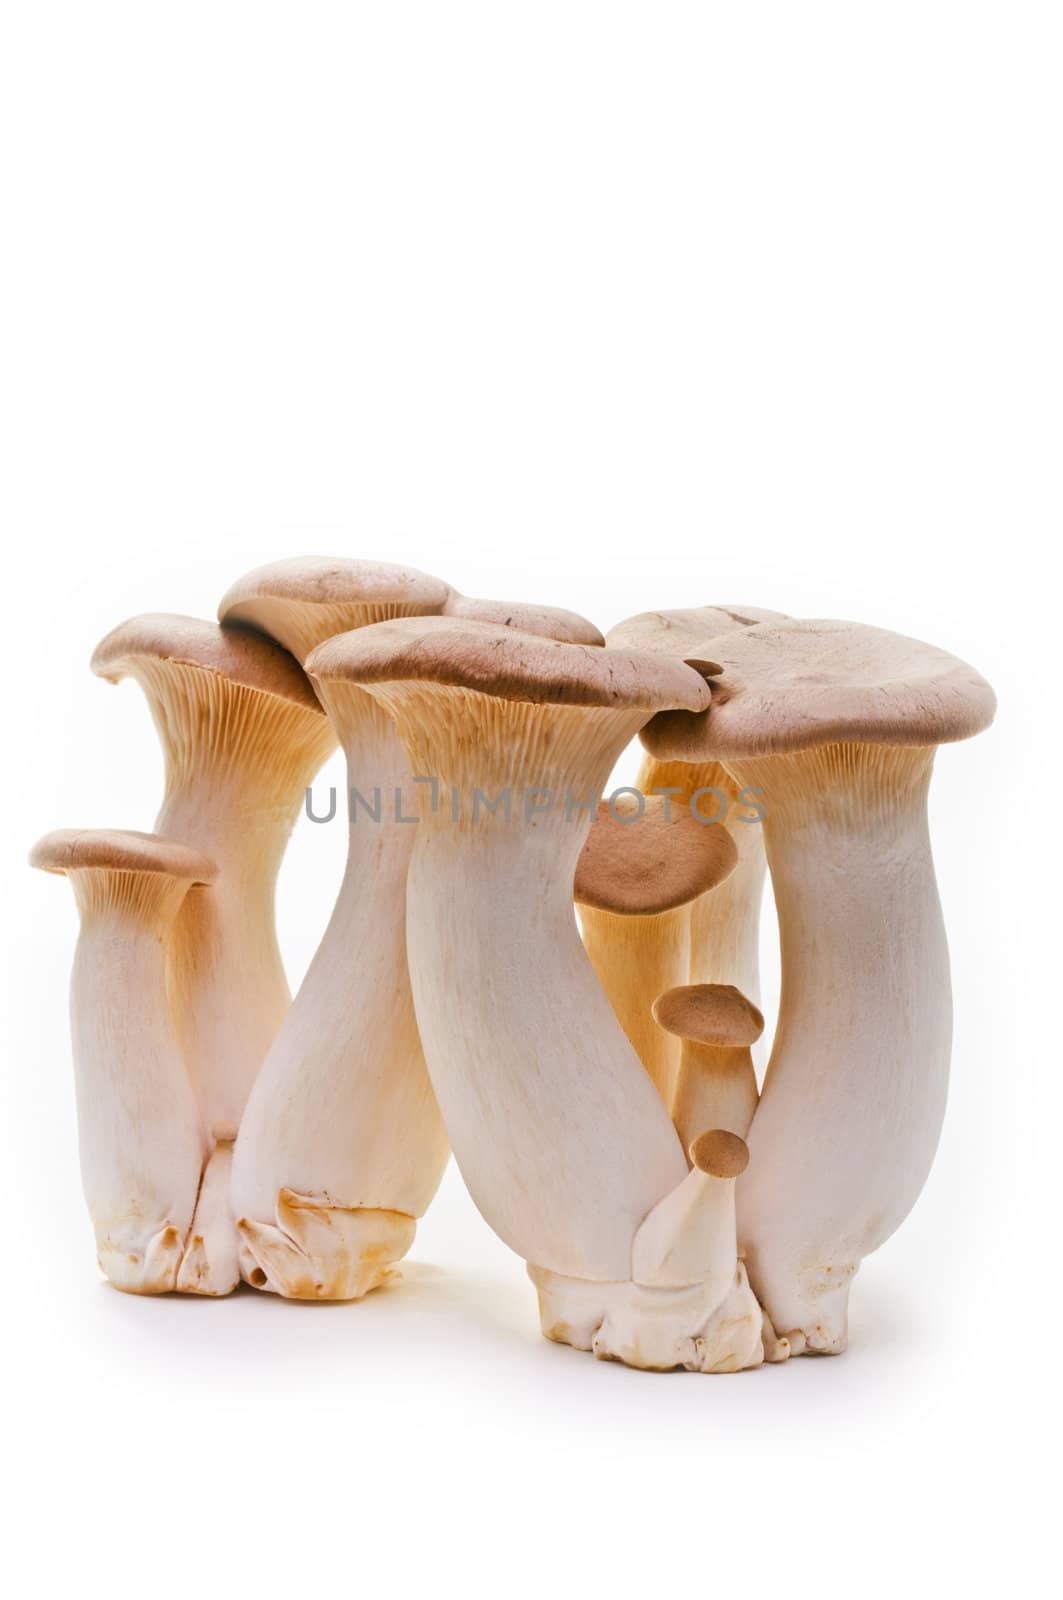 King trumpet. Fresh mushrooms on a white background.